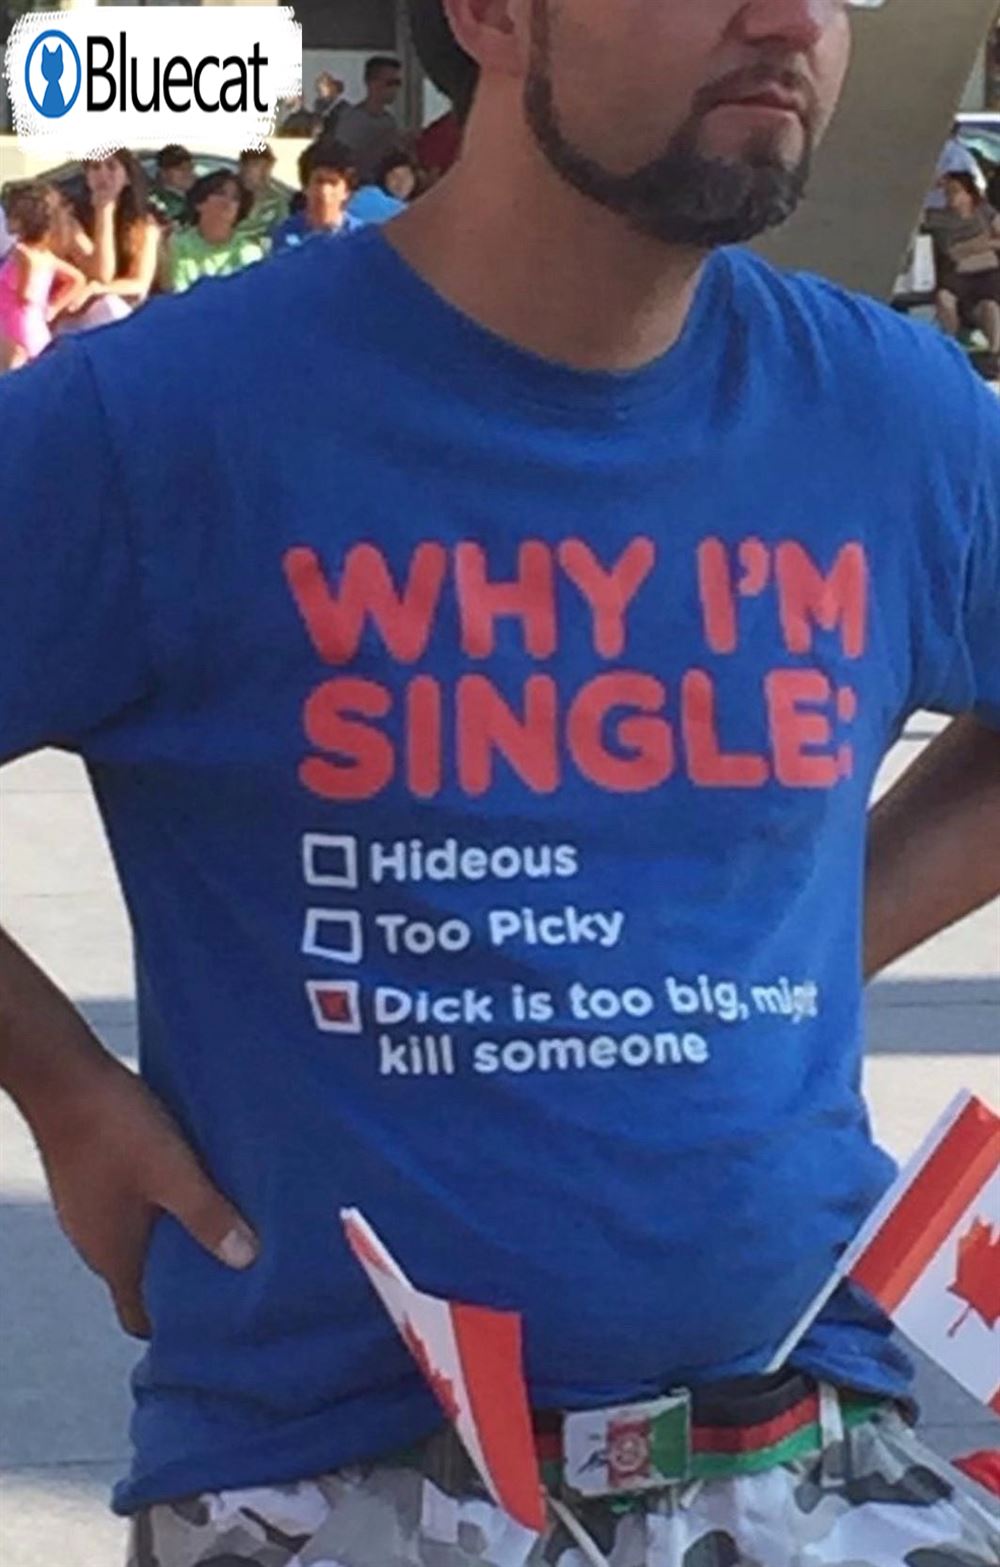 Why Im Single Dick Is Too Big Might Kill Someone Shirt